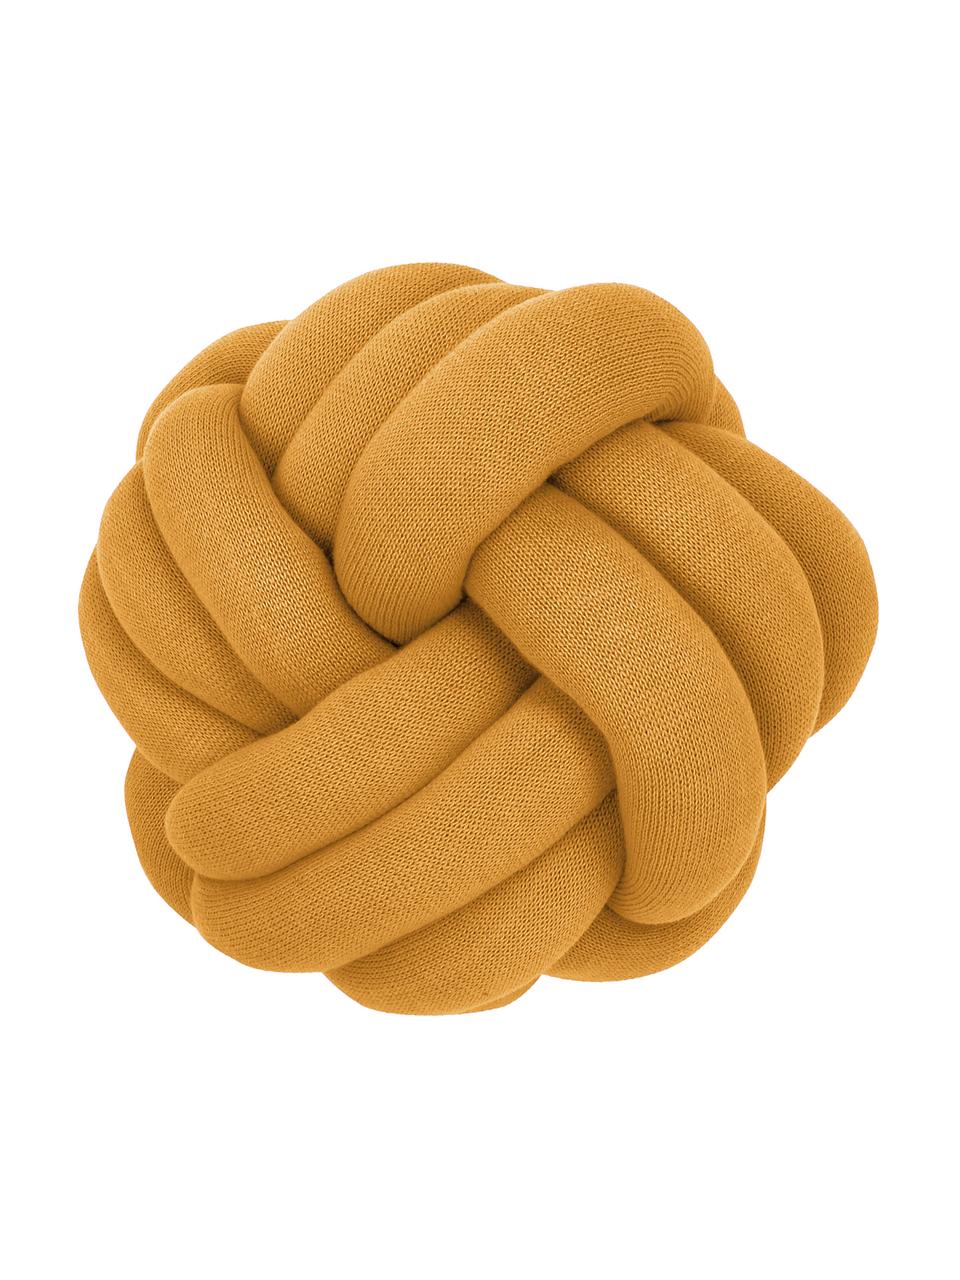 Cuscino annodato giallo senape Twist, Giallo senape, Ø 30 cm